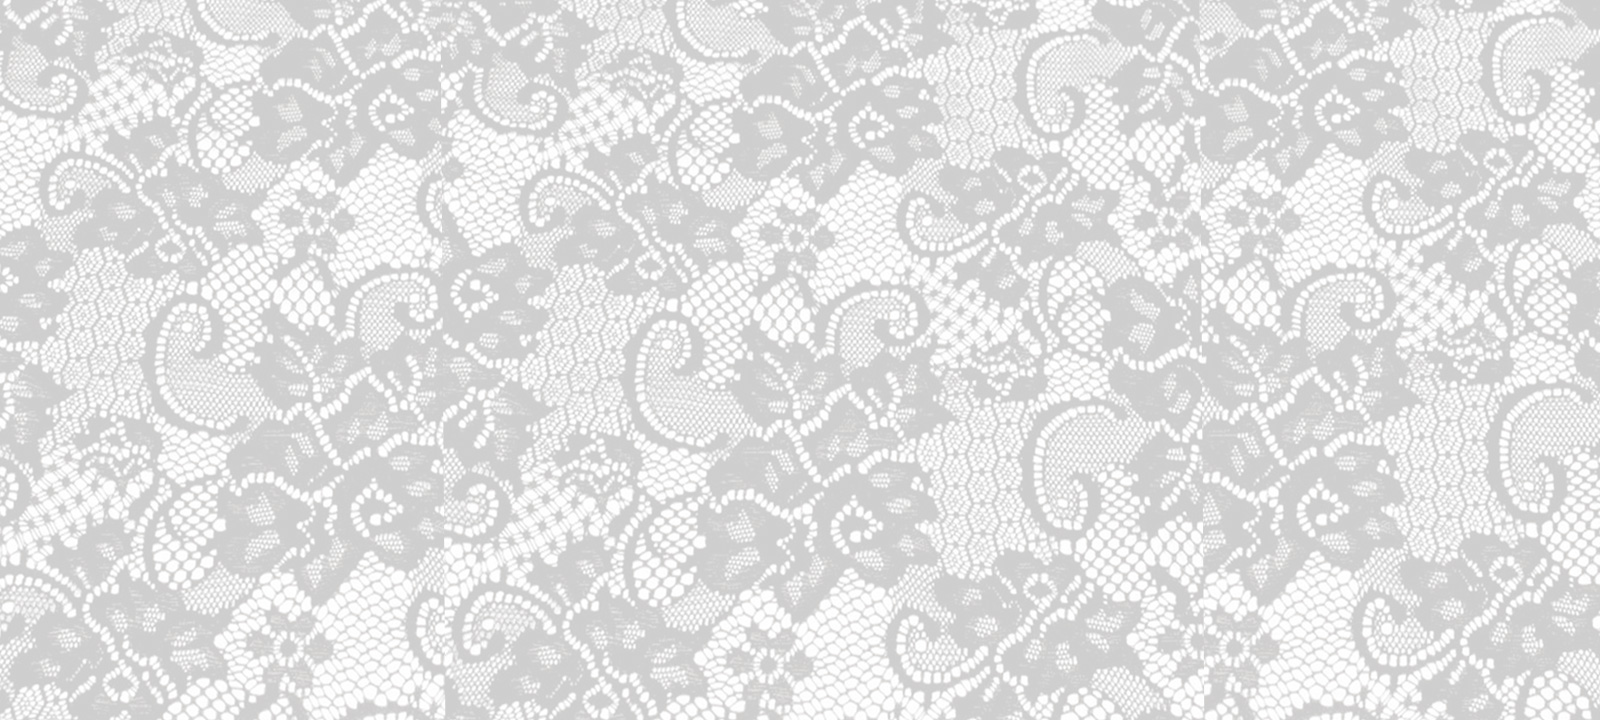 tumblr grey backgrounds White   WallpaperSafari Background Lace